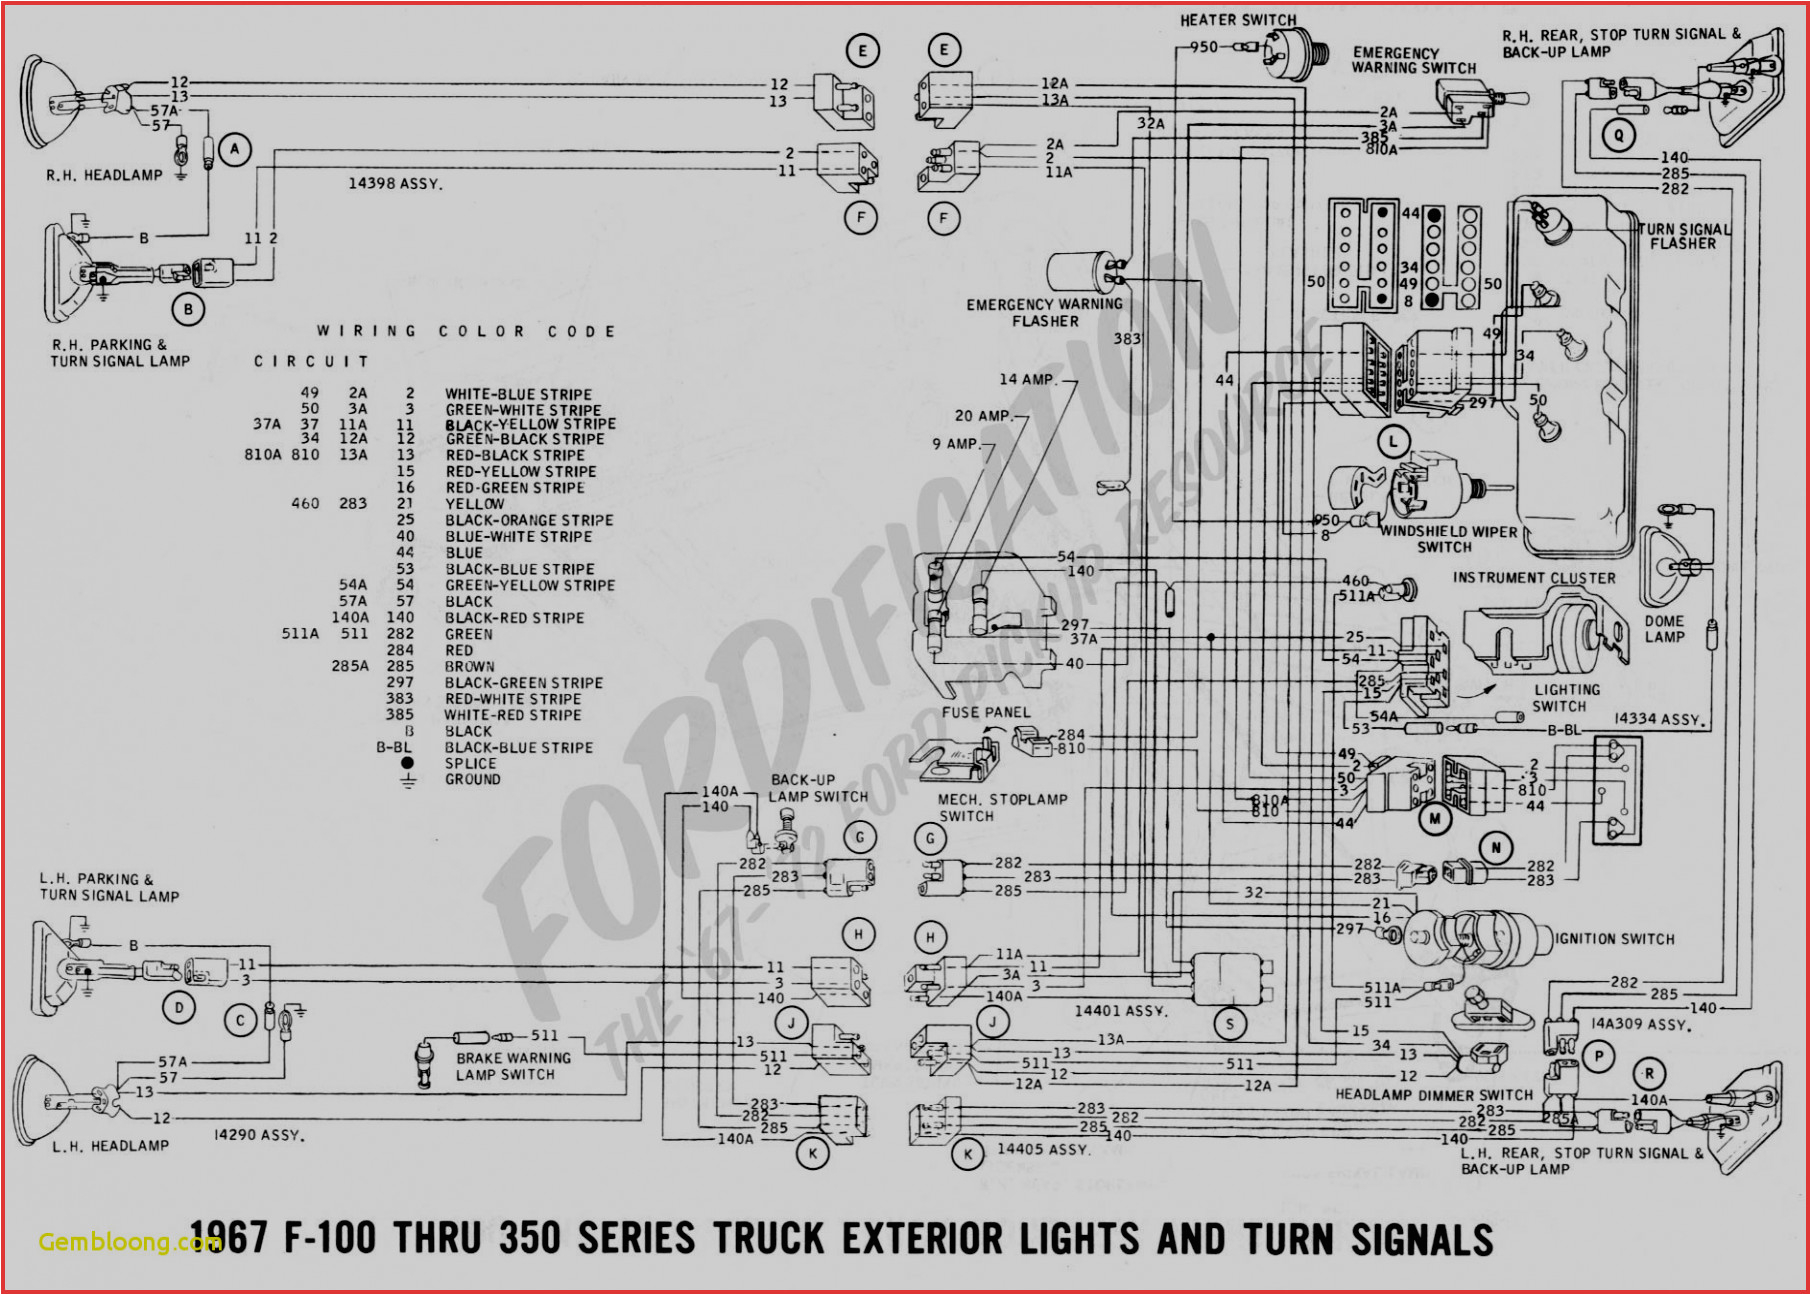 brake light turn signal wiring diagram download ford trucks wiring diagrams ford f150 wiring diagrams best